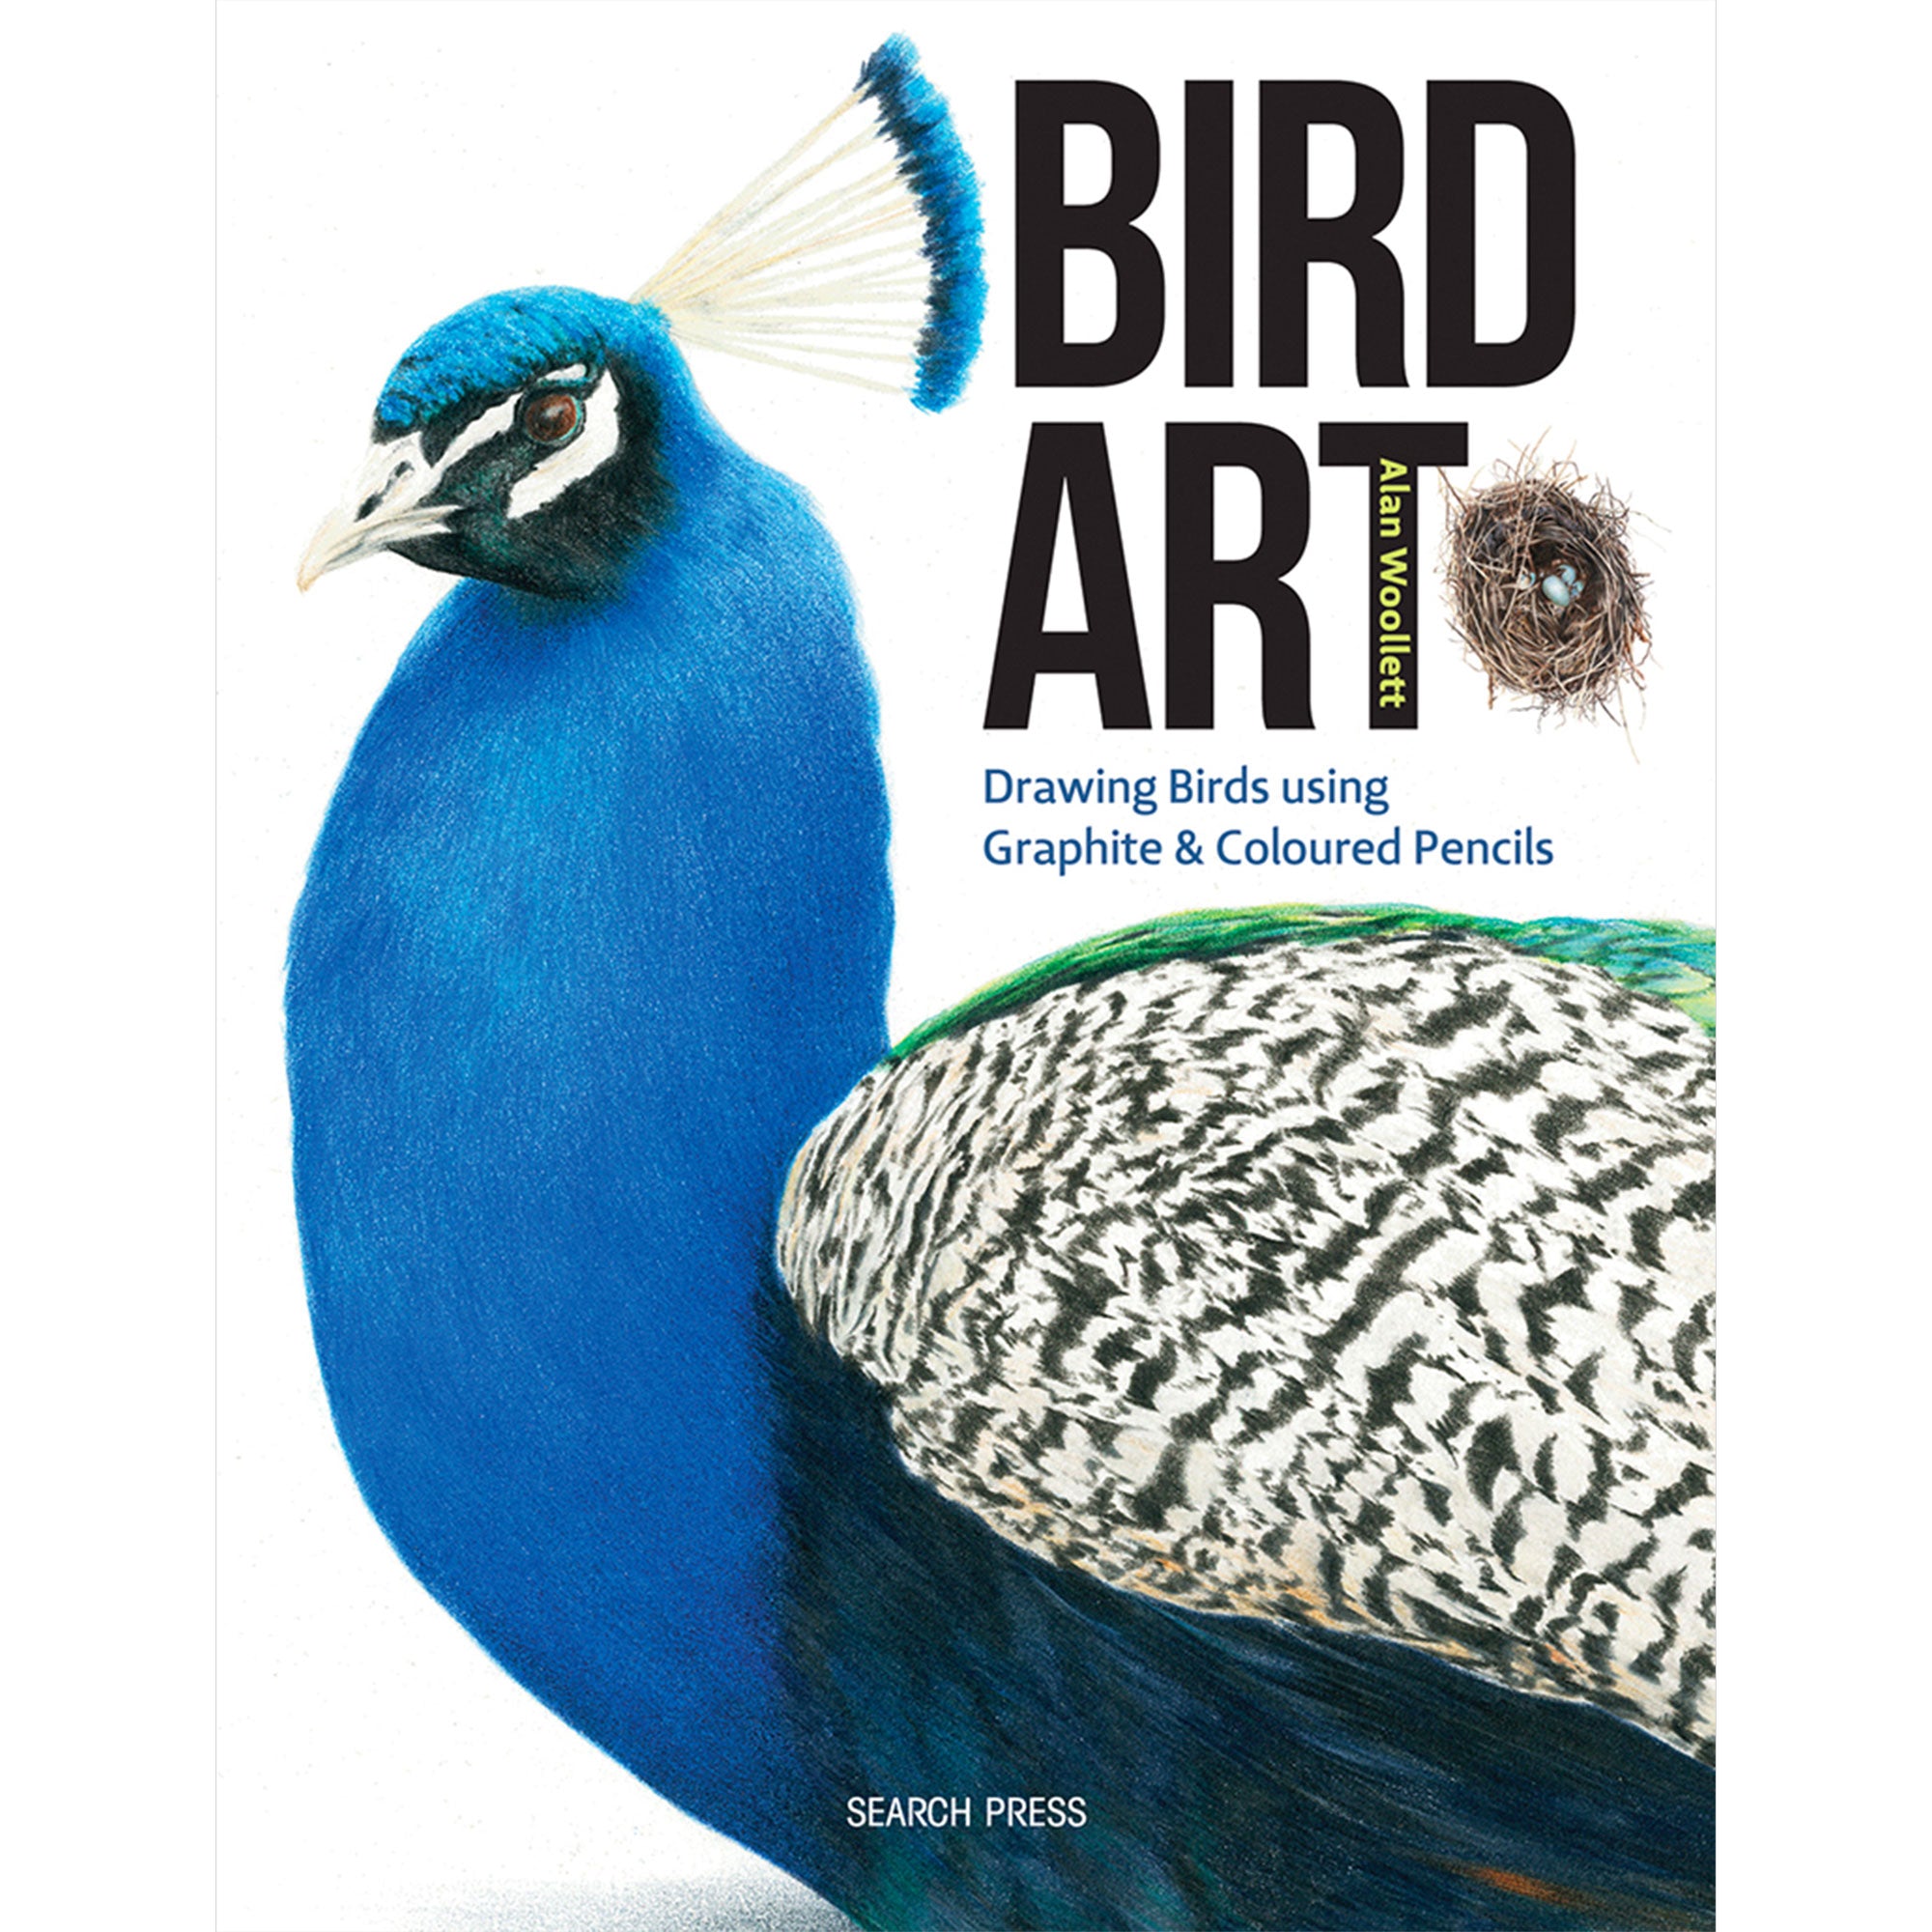 Bird Art: Drawing Birds using Graphite & Coloured Pencils book cover